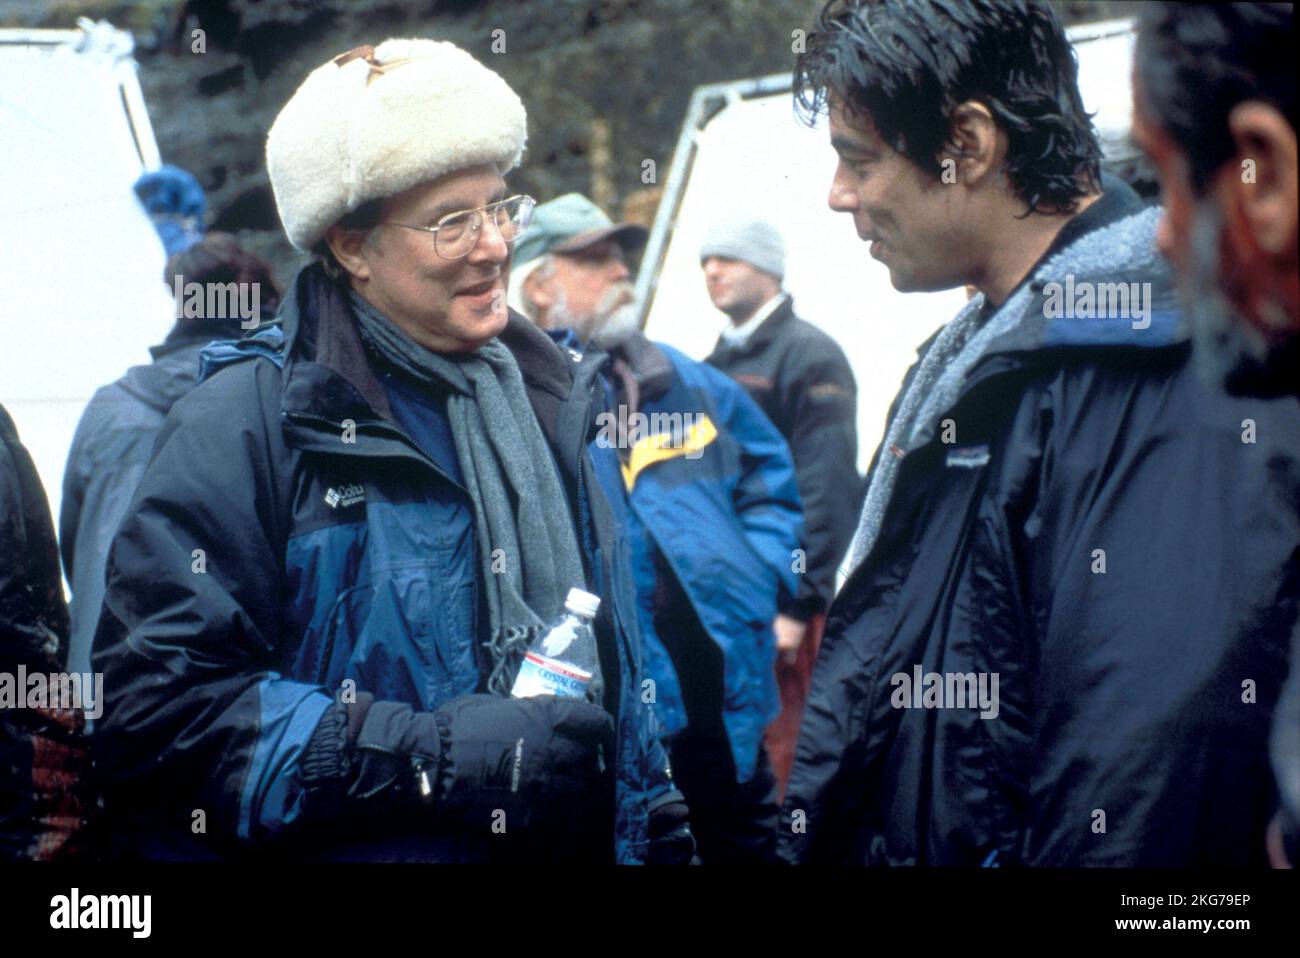 Benicio Del Toro, William Friedkin sur le tournage on the set du film 'Traqué', 'The Hunted' (2003) usa Directed by William Friedkin Stock Photo